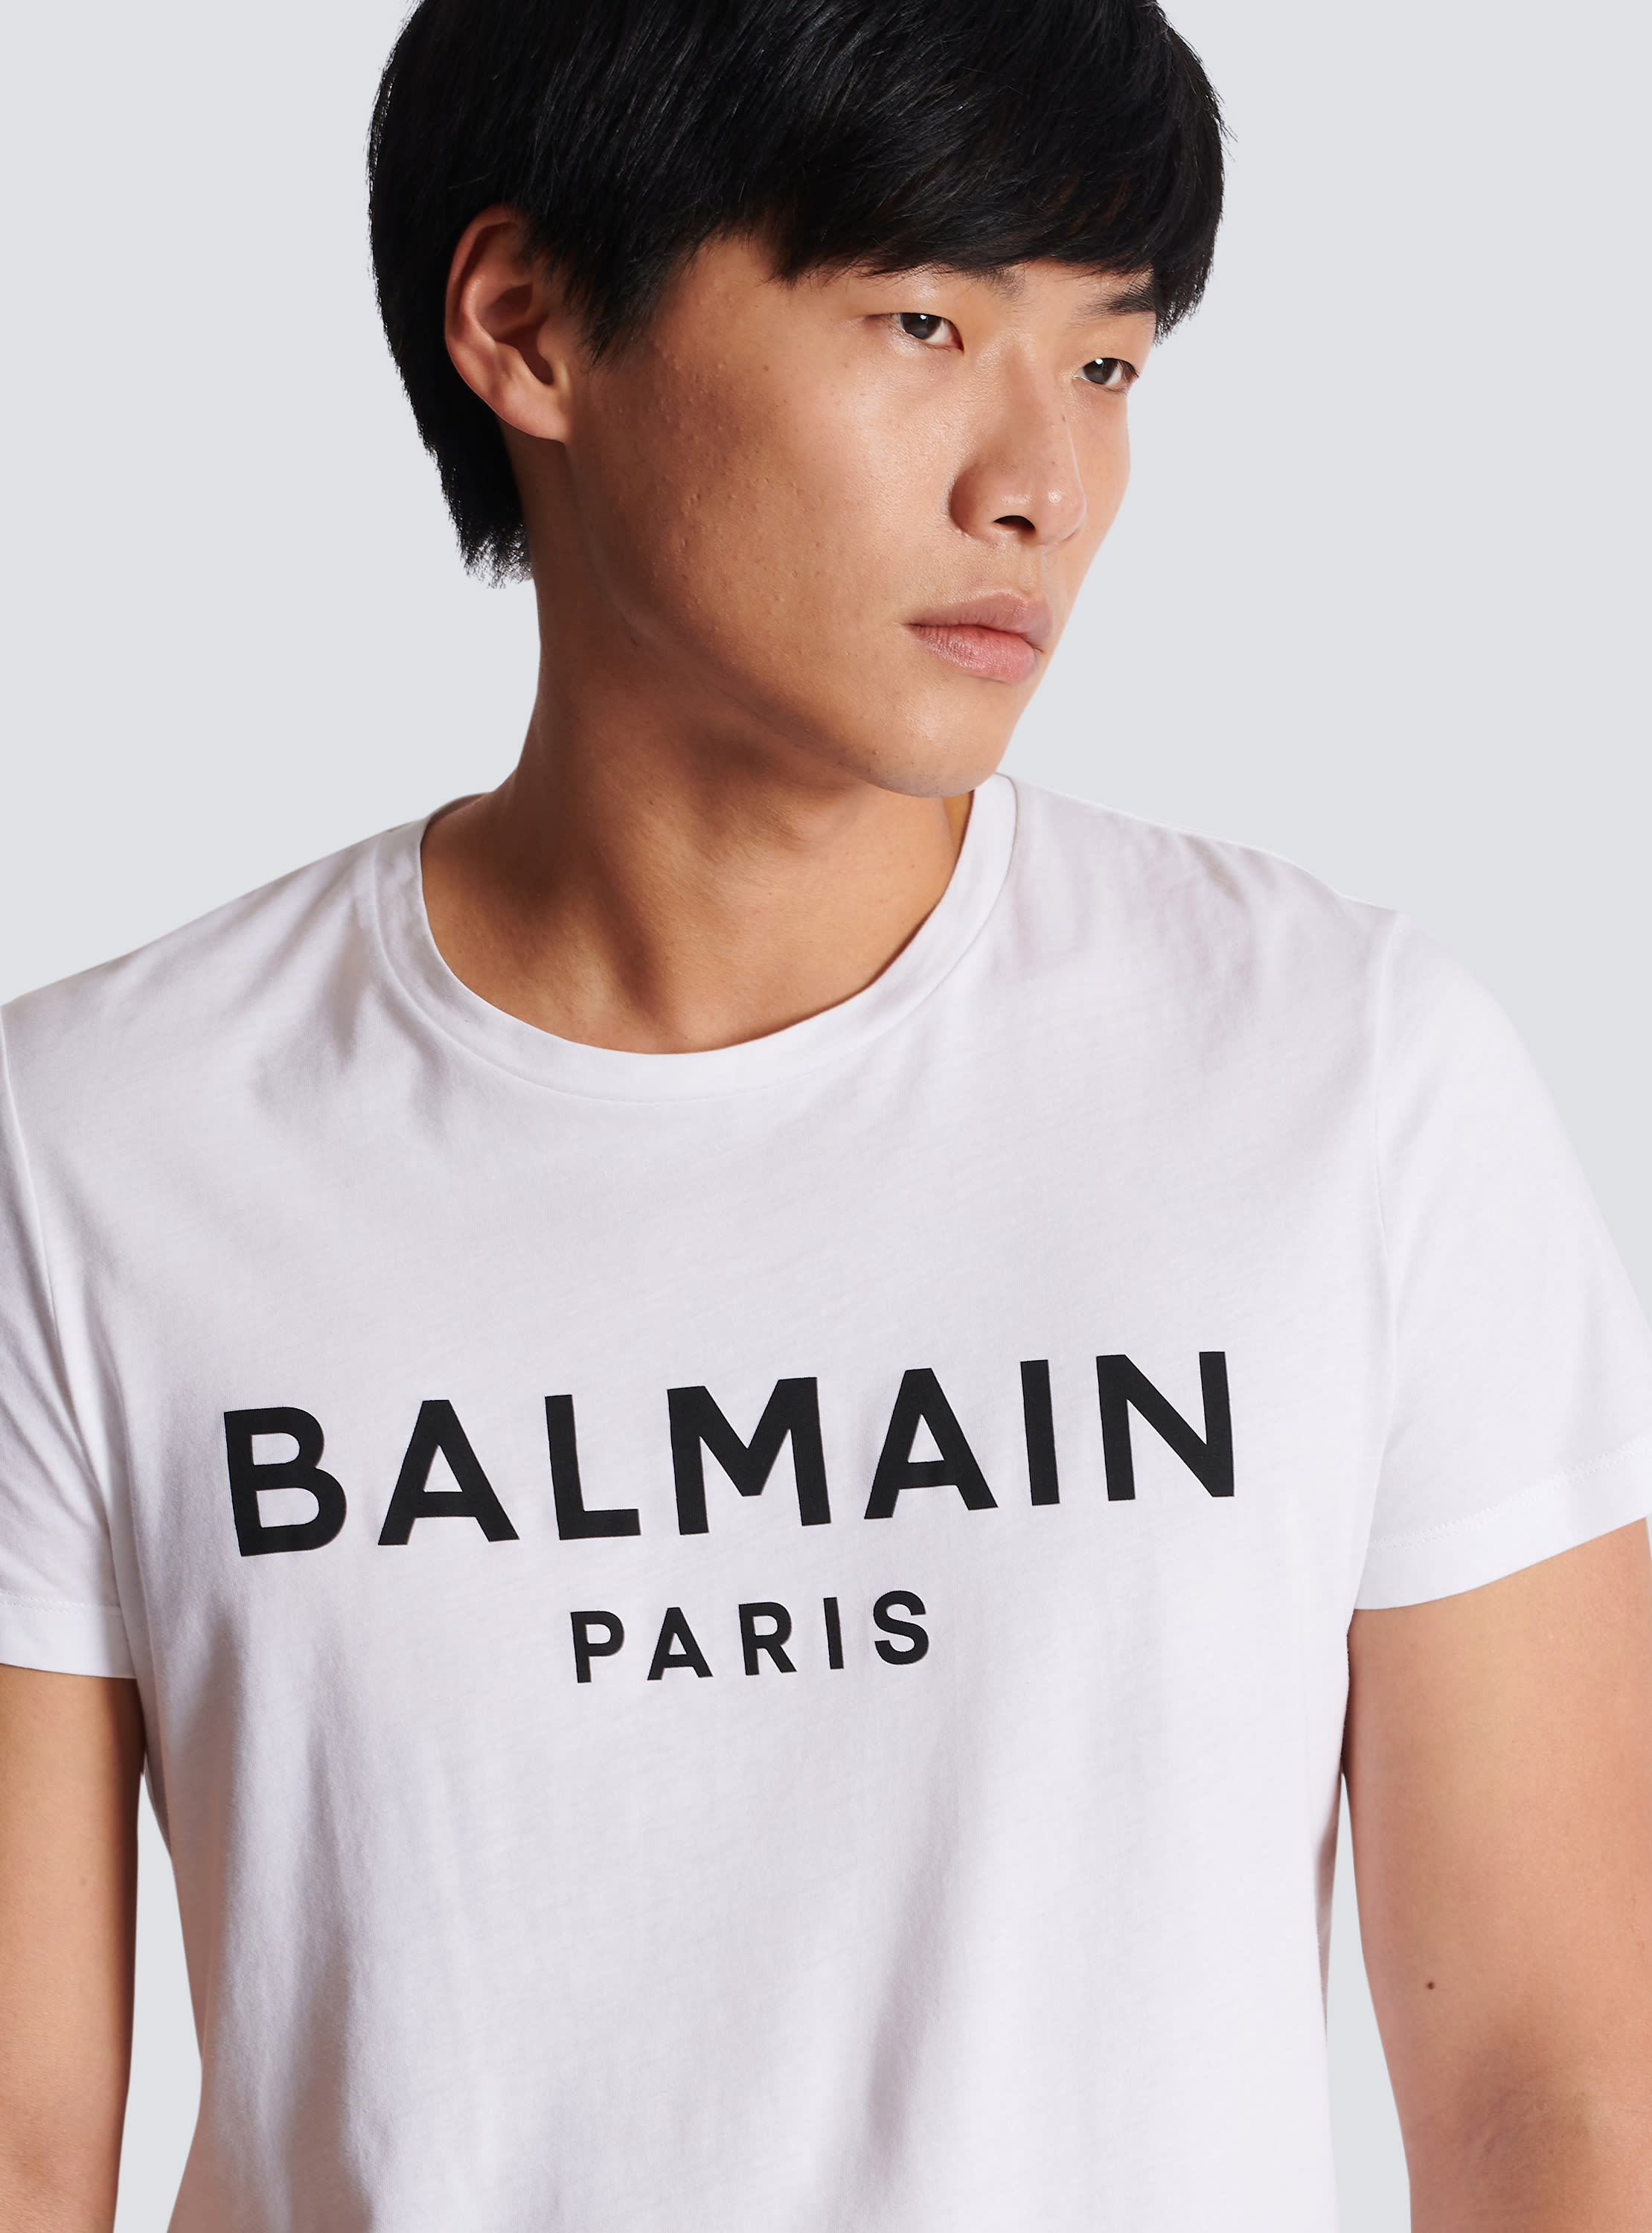 Balmain Paris T-shirt white | BALMAIN